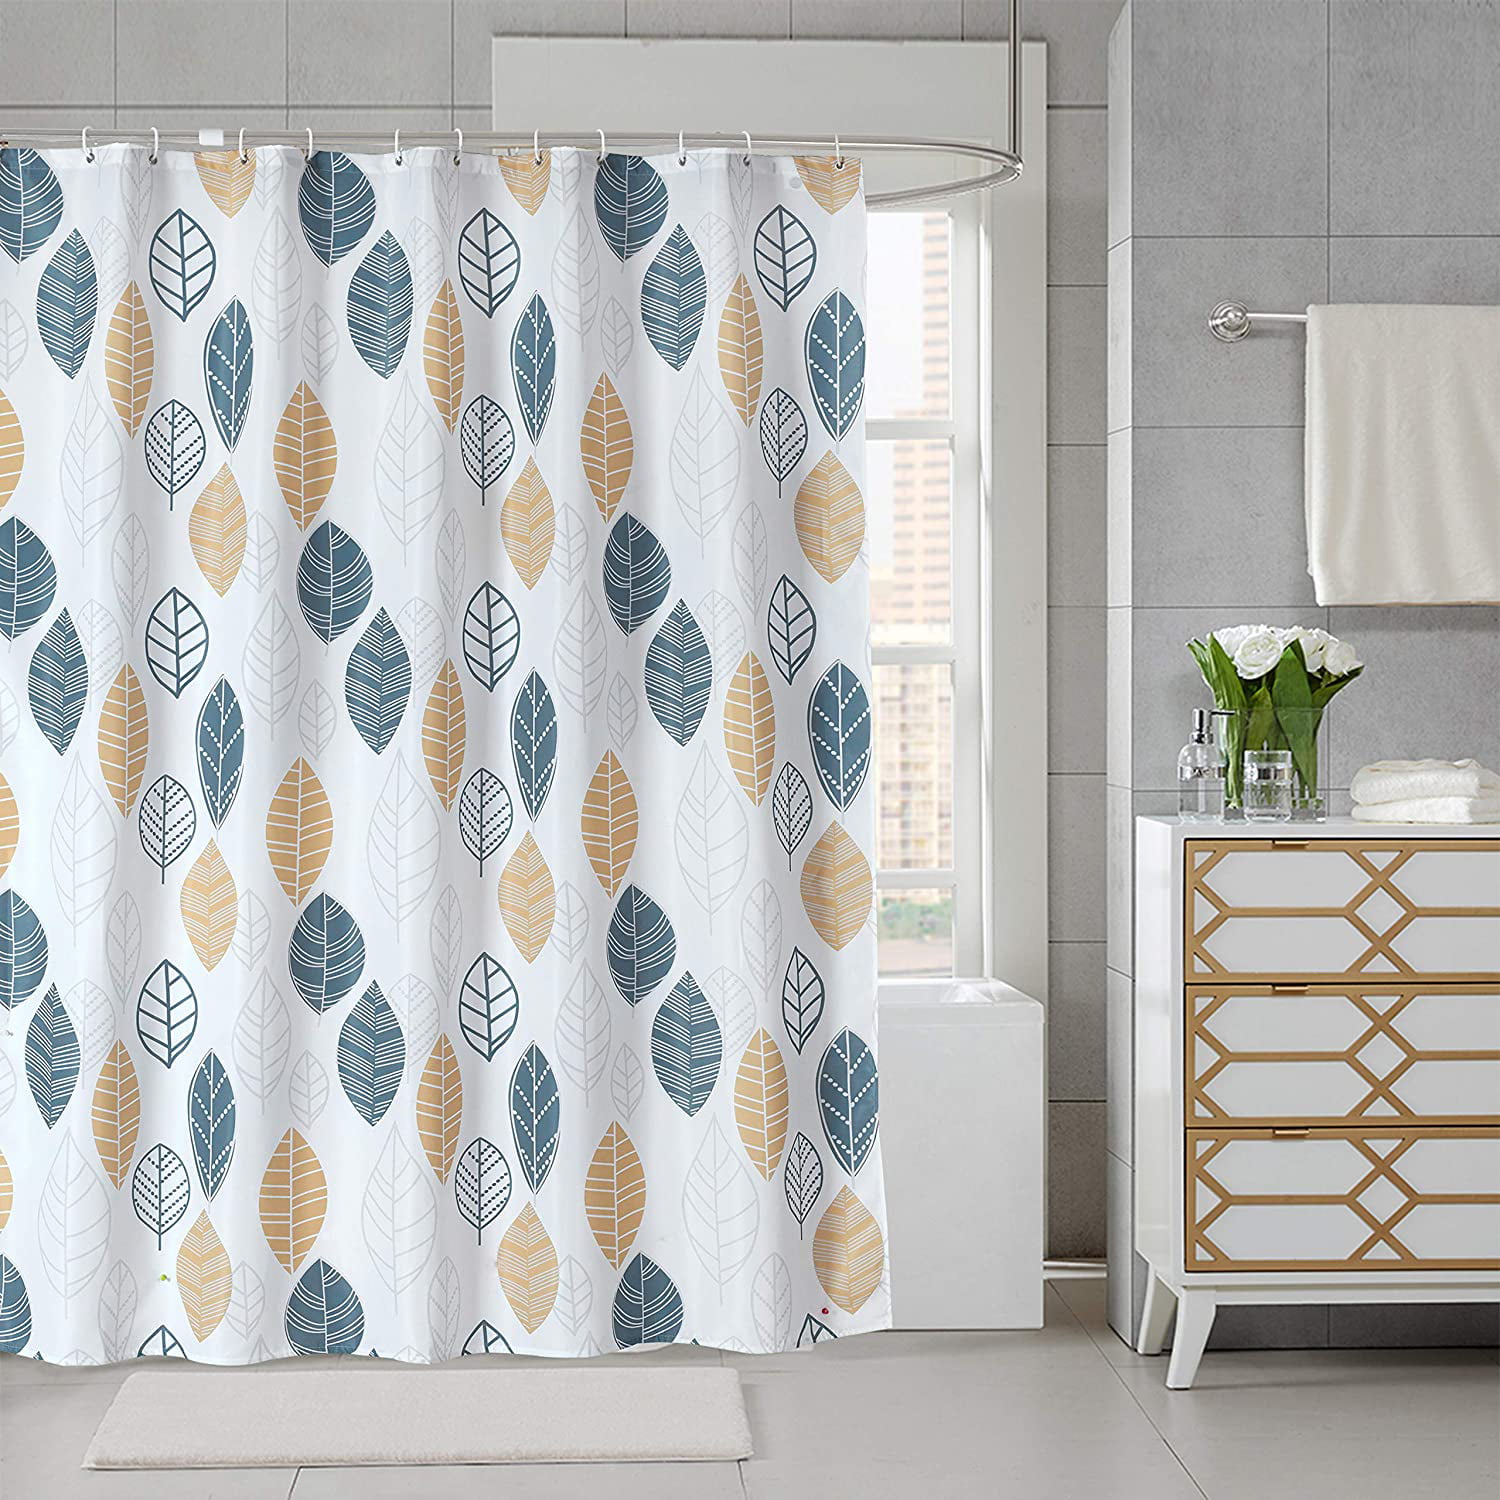 Macaron Cake Shower Curtain Bedroom Decor Waterproof Fabric & 12Hooks 180*180cm 